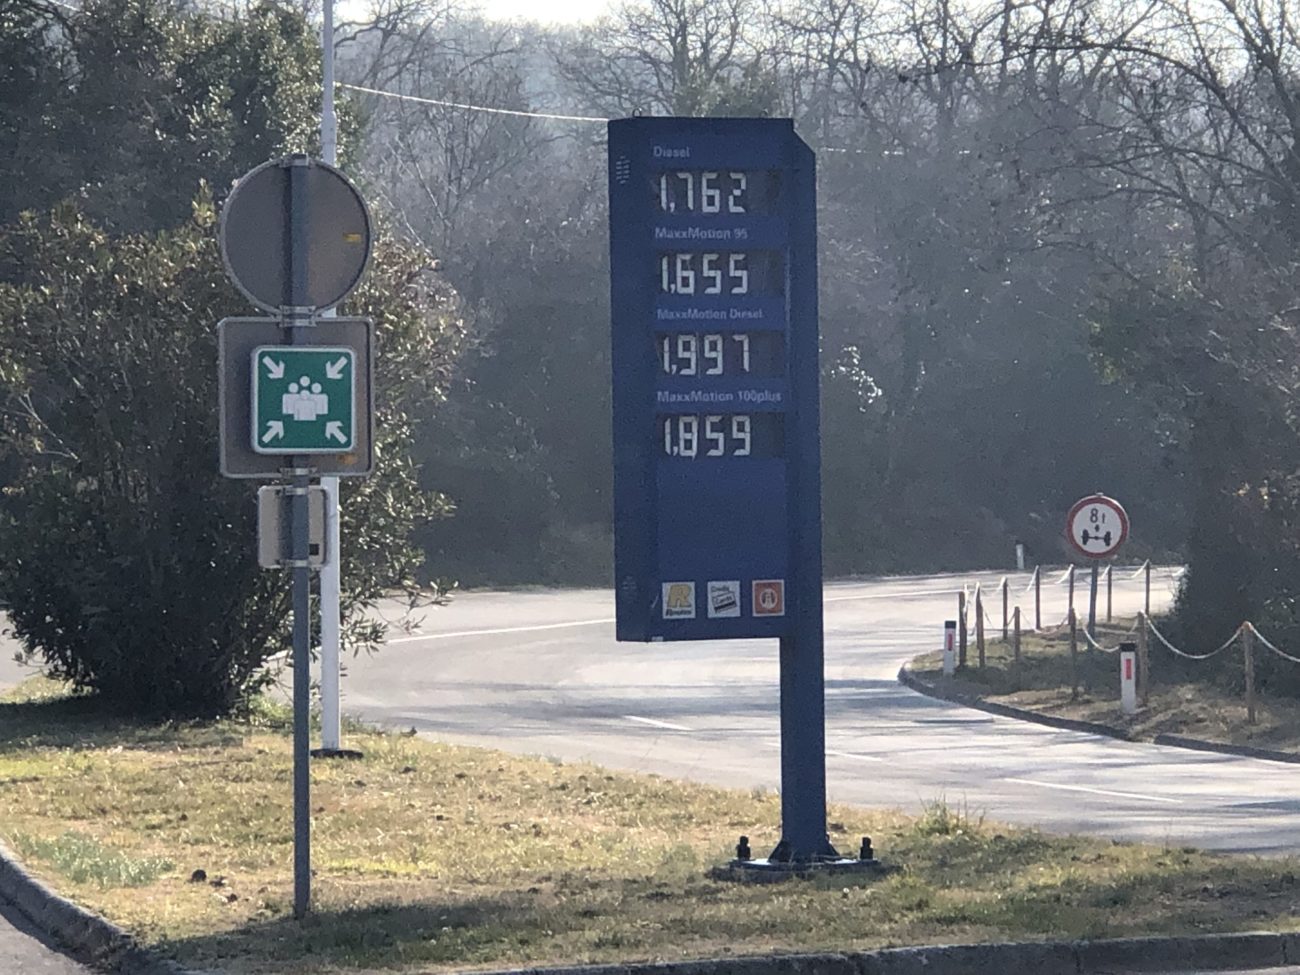 prezzi benzina slovenia Lazzaretto 10-3-2022